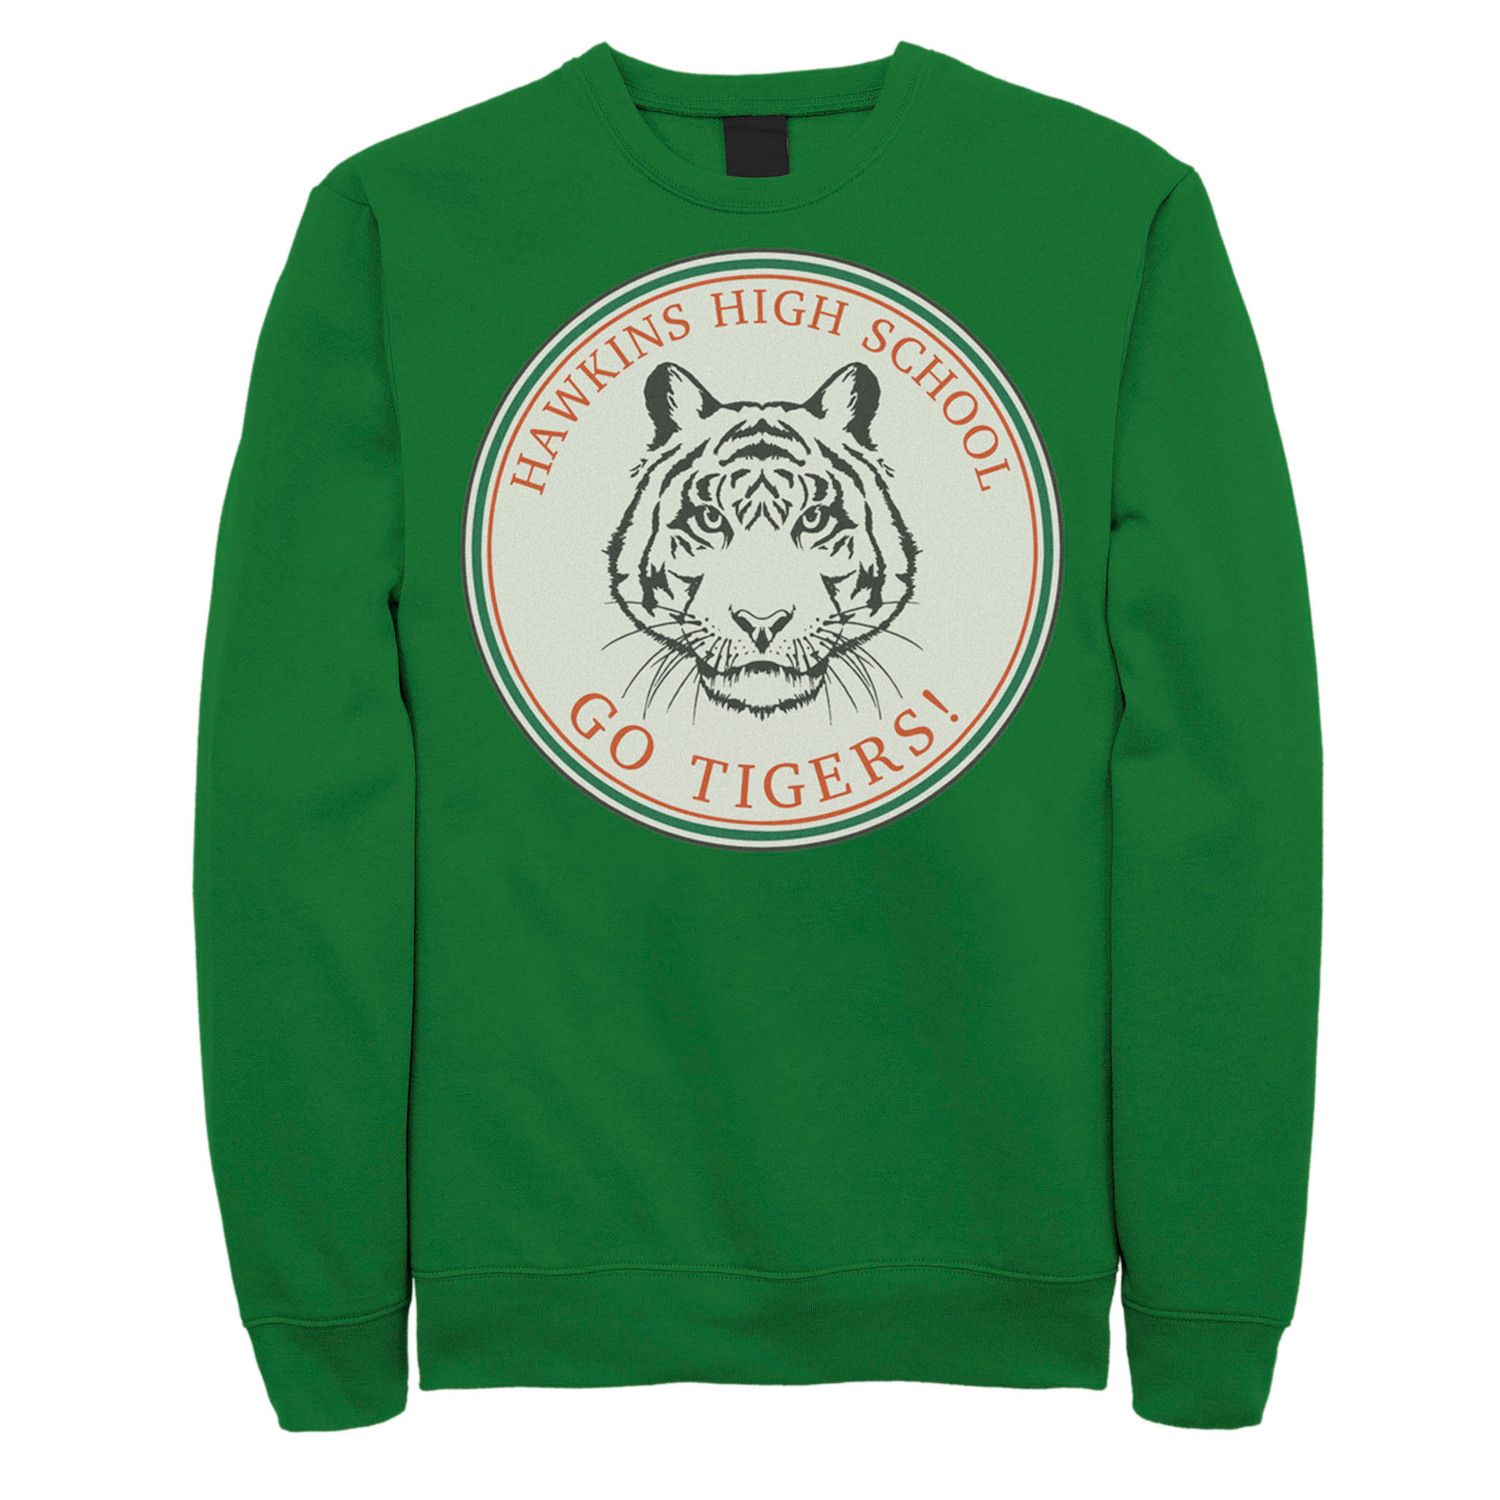 Hawkins high school 1986 green tiger logo shirt, hoodie, sweater